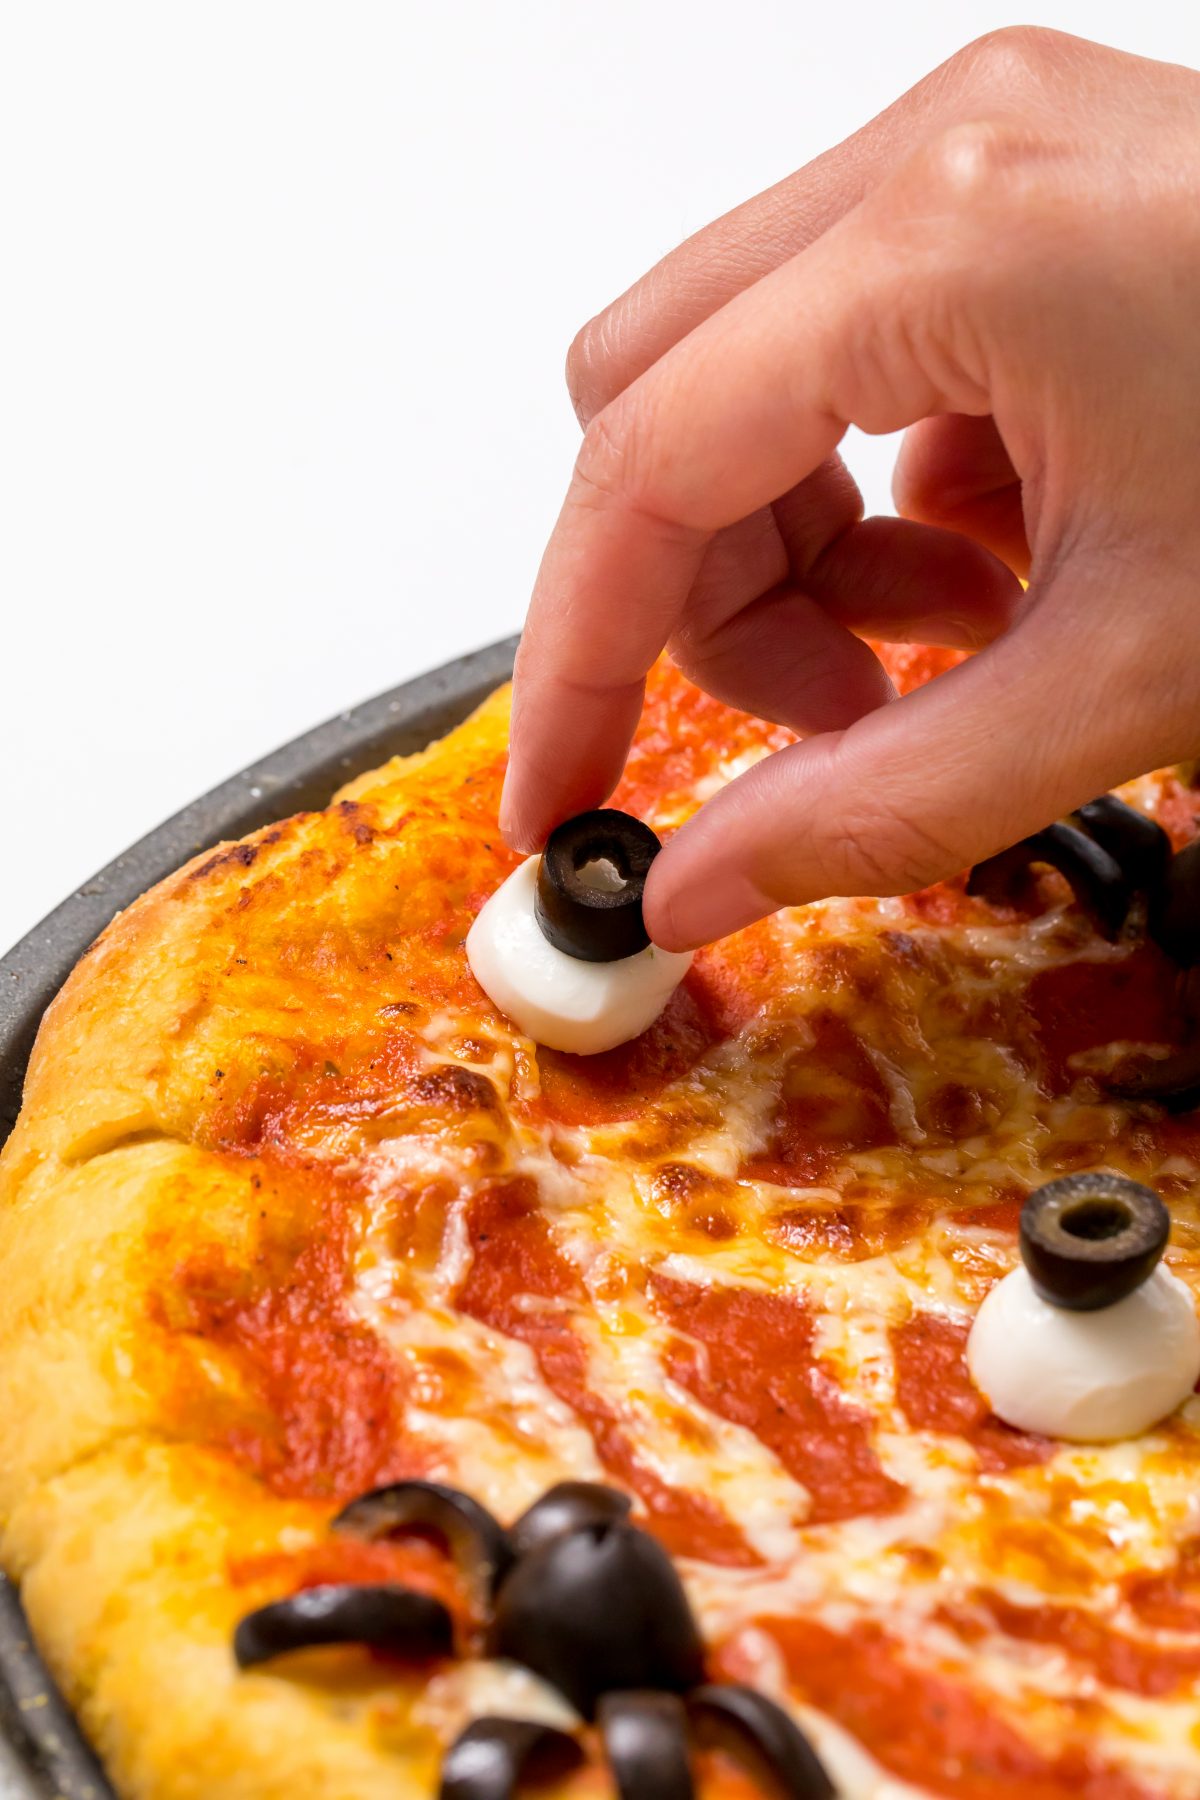 Create eyeballs using mozzarella balls and olives